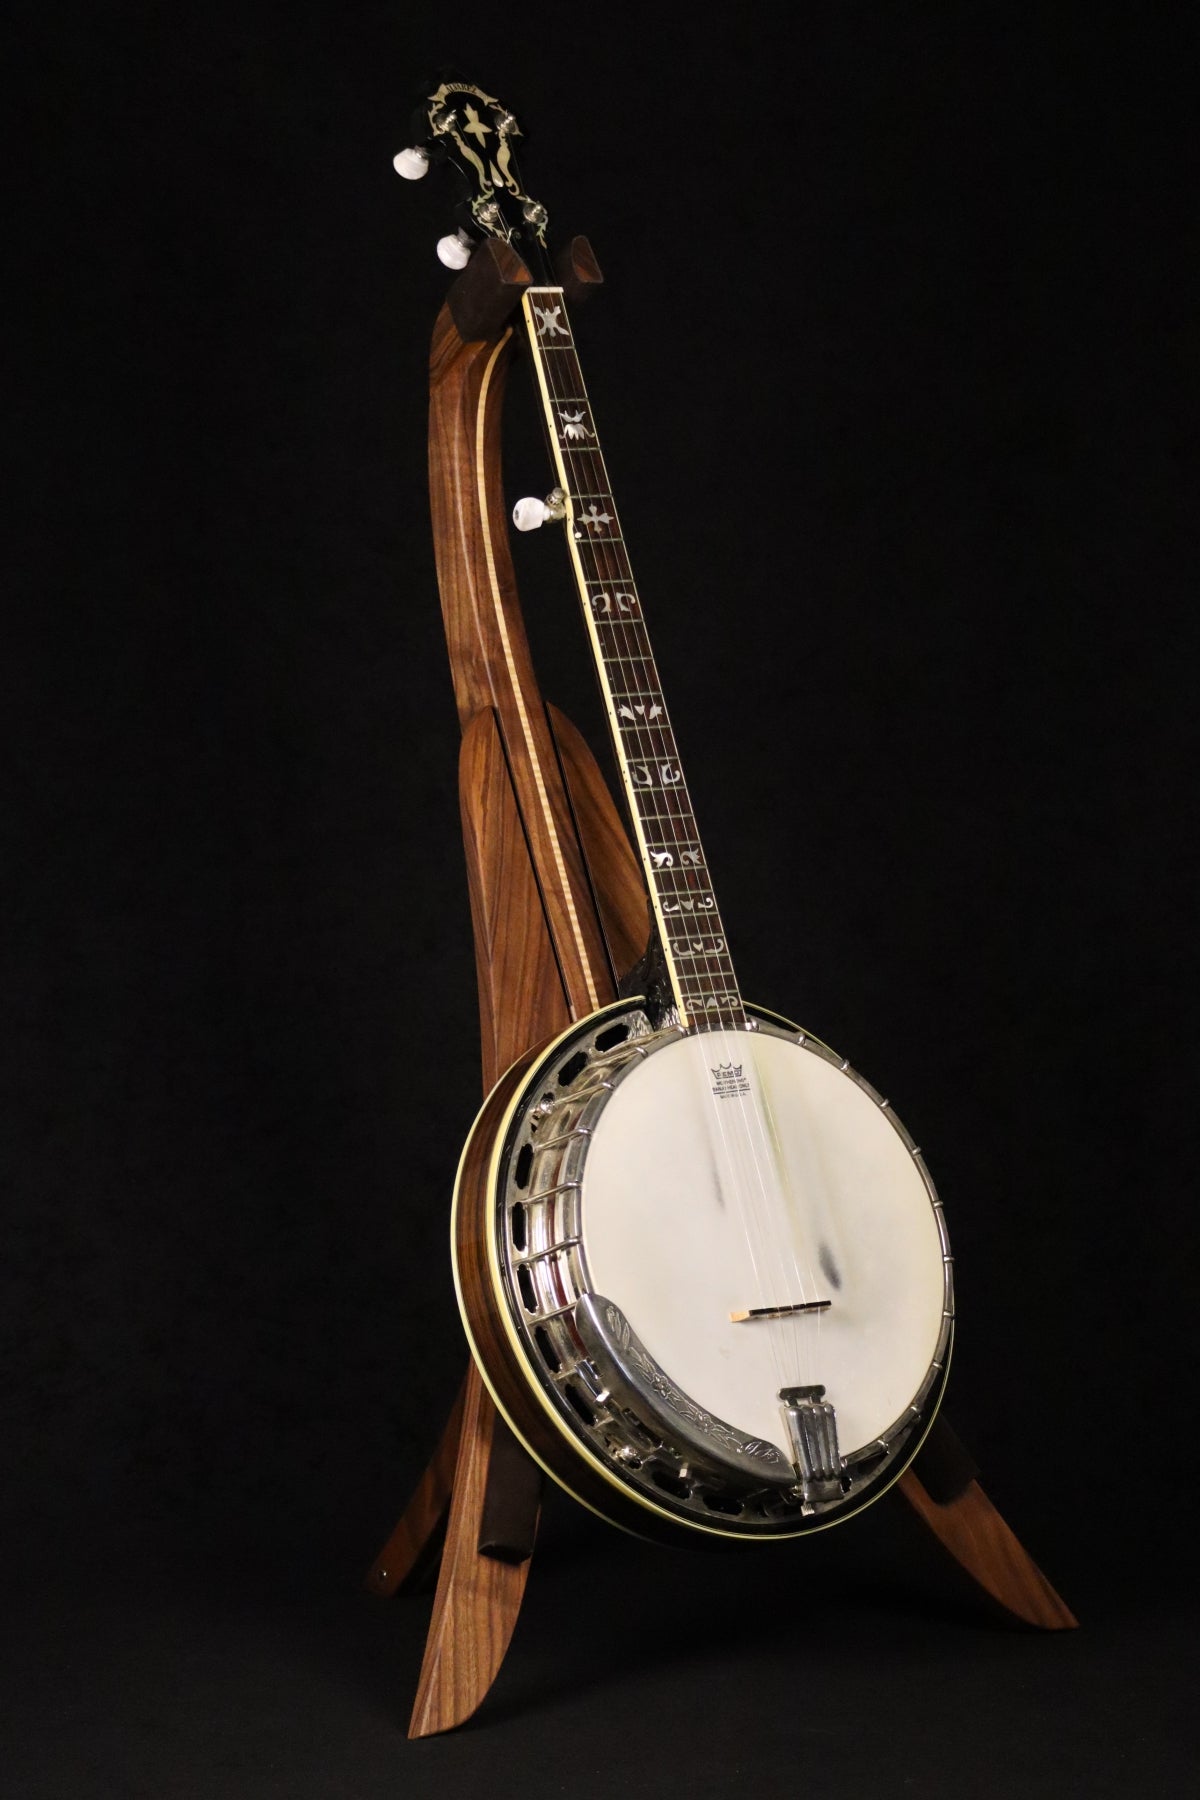 Folding walnut and curly maple wood banjo floor stand full front image with Alvarez banjo